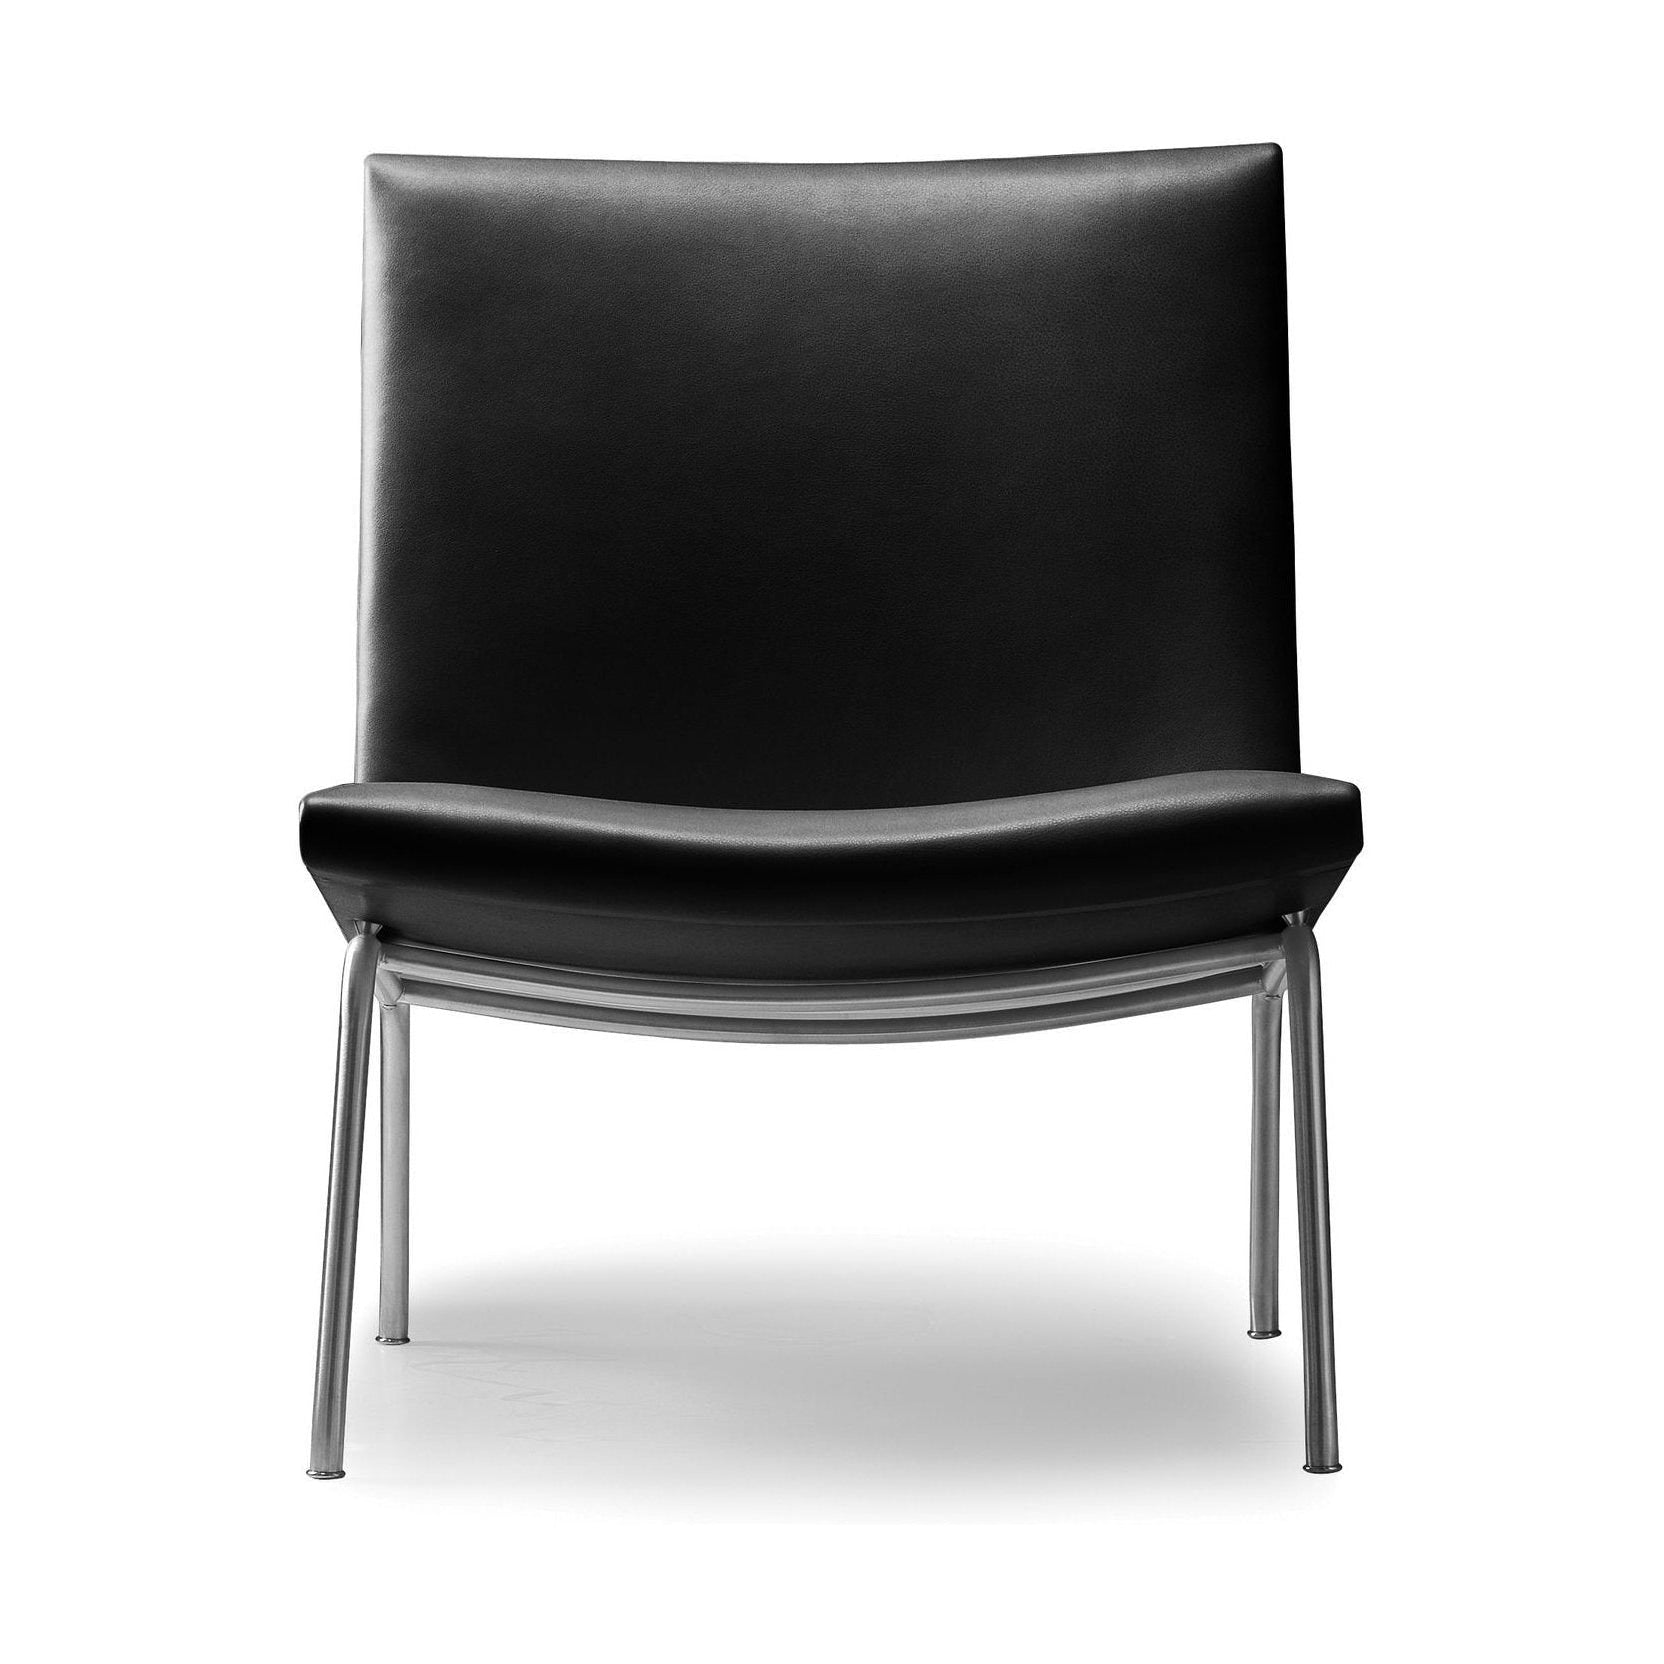 CARL HANSEN CH401 Kastrup Shounge sedia, in acciaio inossidabile/pelle nera Thor 301